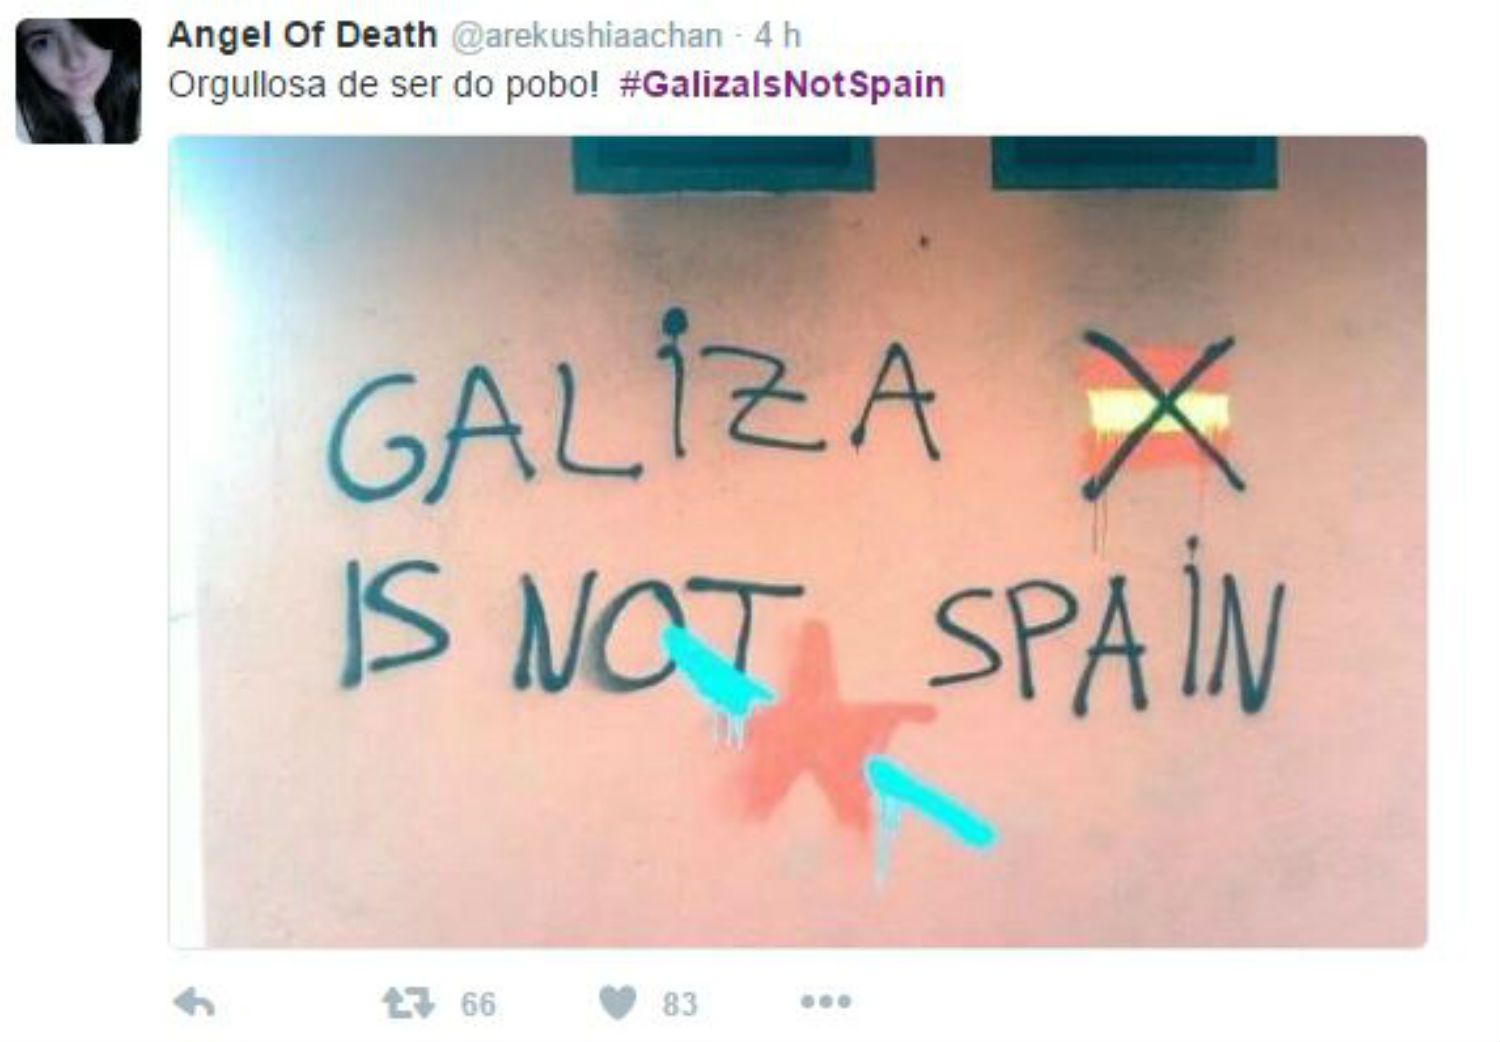 Galícia treu pit: #GalizaIsNotSpain ja és trending tòpic